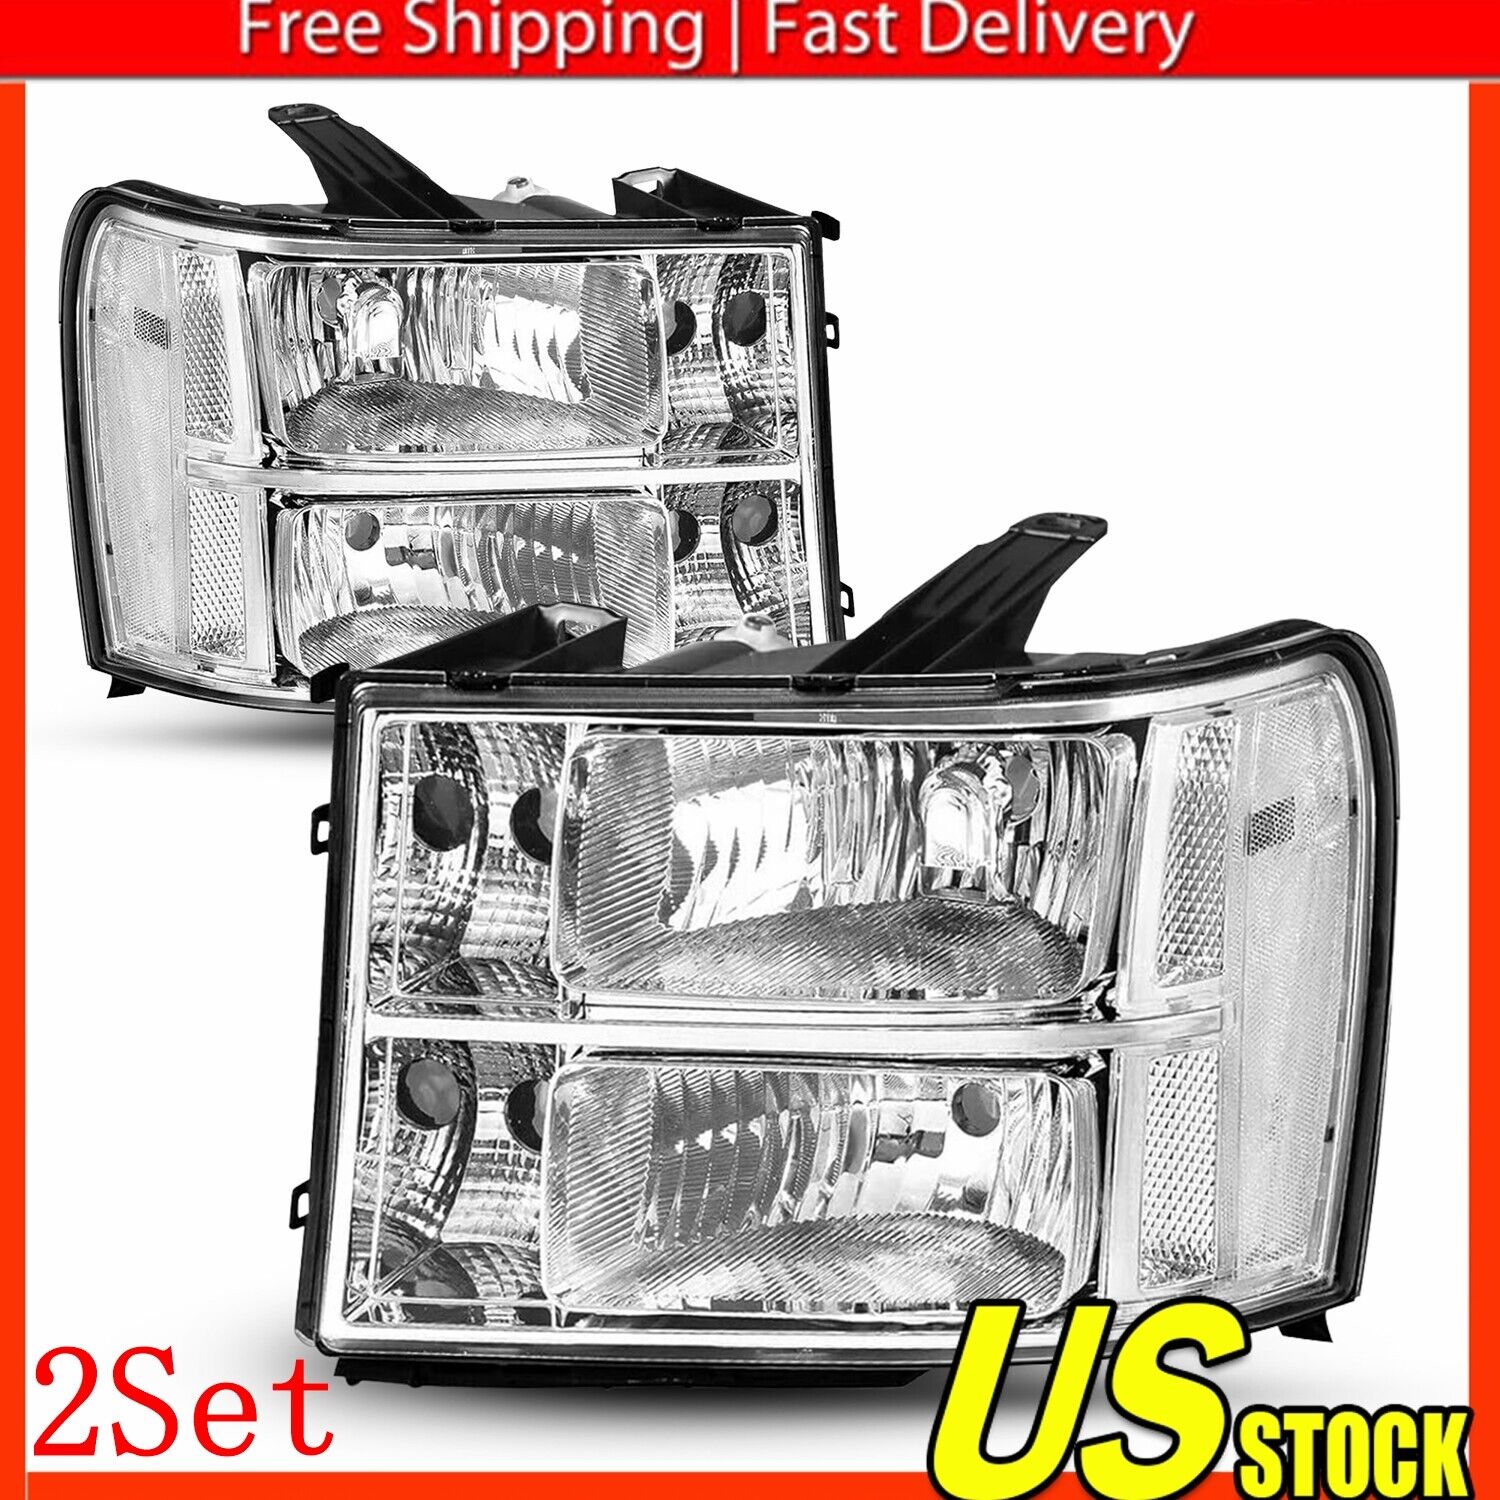 Headlights Fits 07-13 GMC Sierra 1500 2500HD 3500HD Clear Lamps Left+Right 2Set